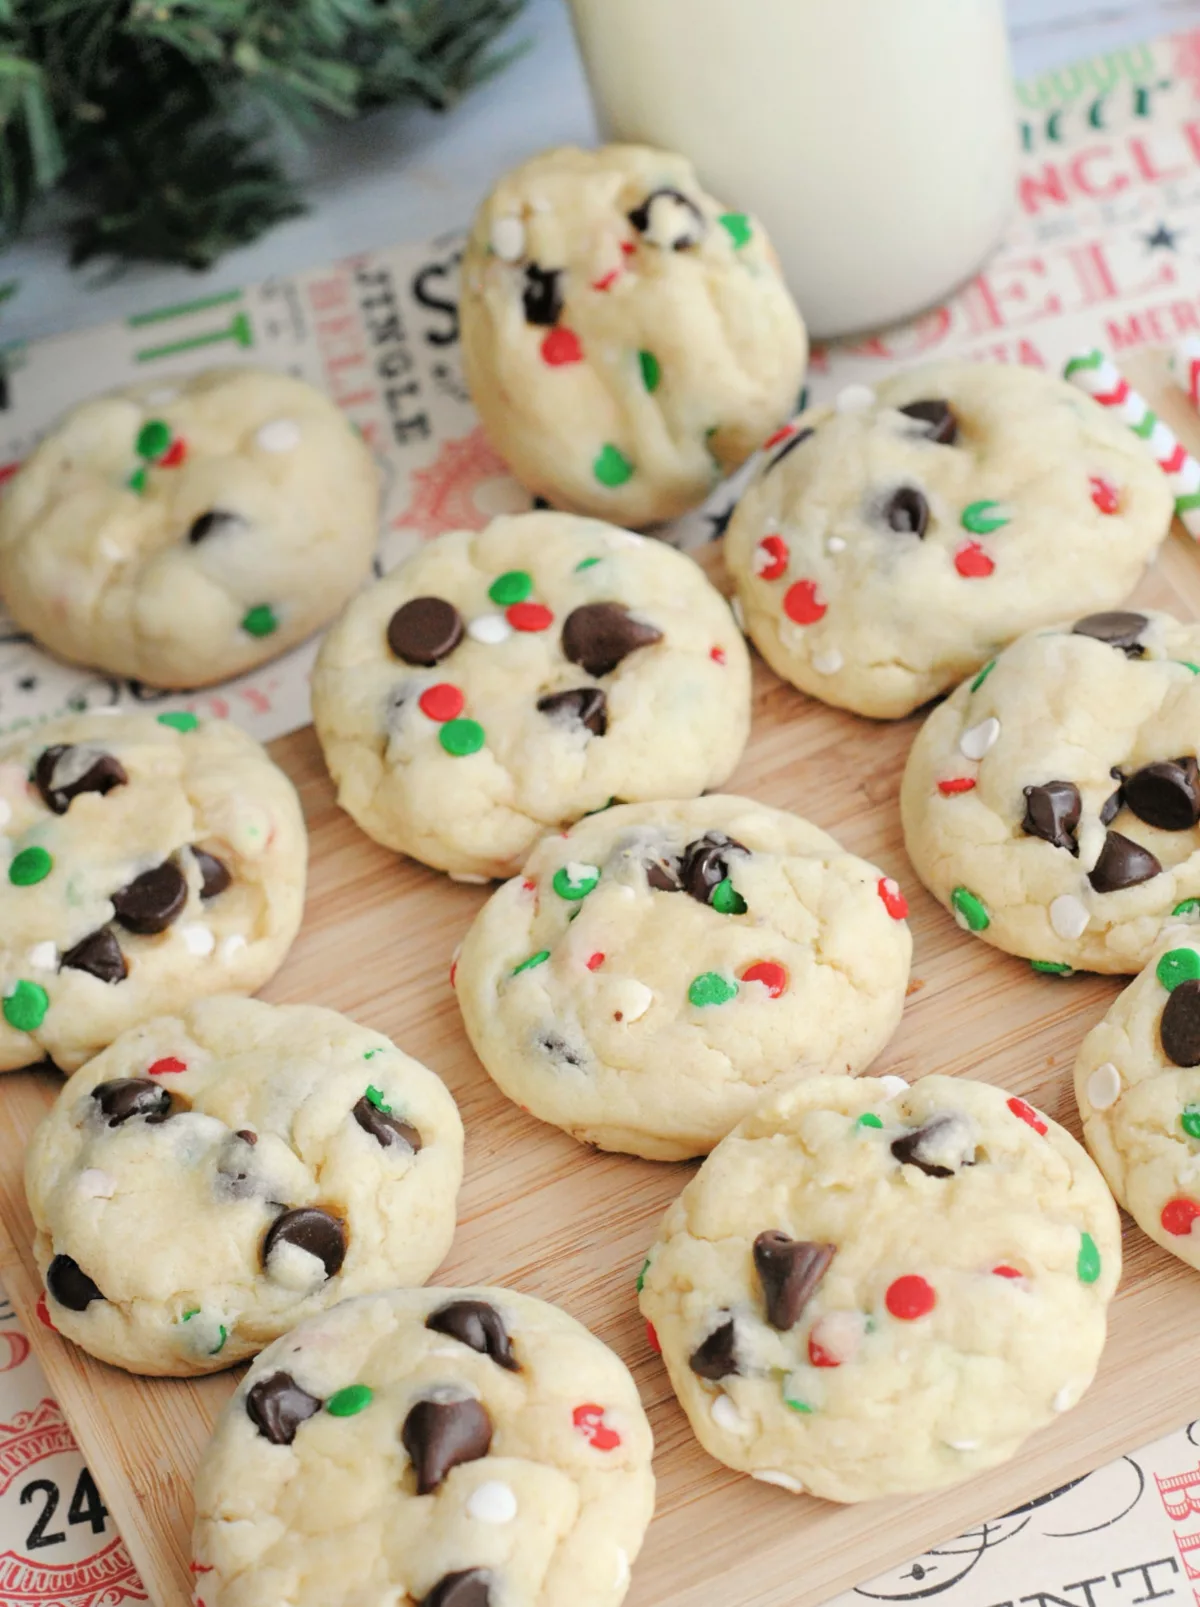 https://therebelchick.com/wp-content/uploads/2015/12/Cake-Mix-Chocolate-Chip-Santa-Cookies-Recipe-2-jpg.webp